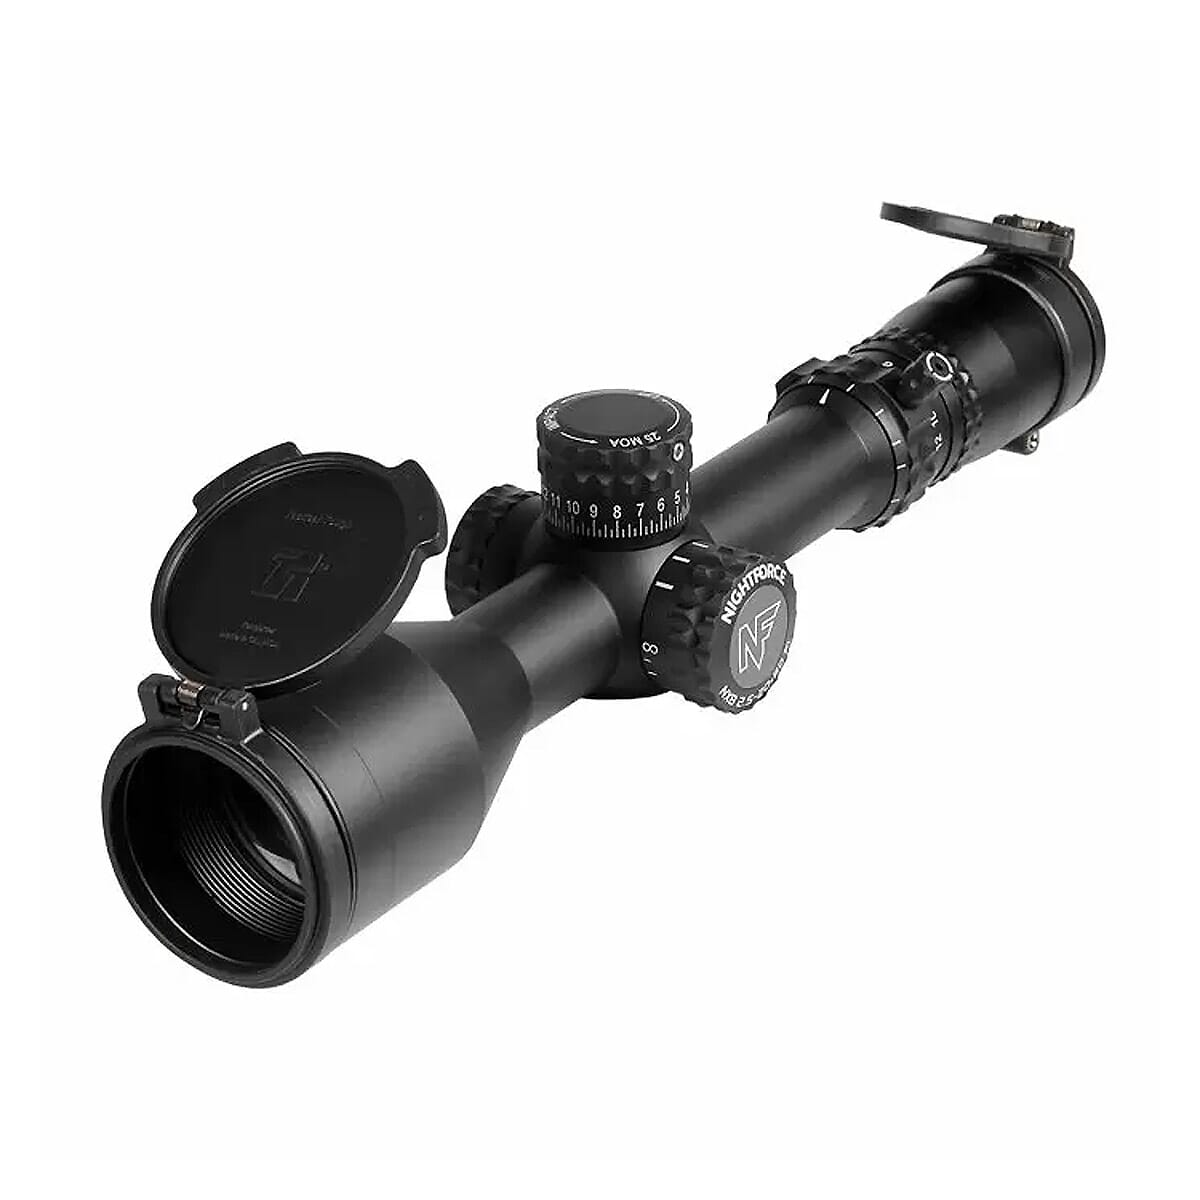 Nightforce NX8 2.5-20x50 F1 MOAR Riflescope w/Tenebraex Flip Up Covers/Power Throw Lever C622